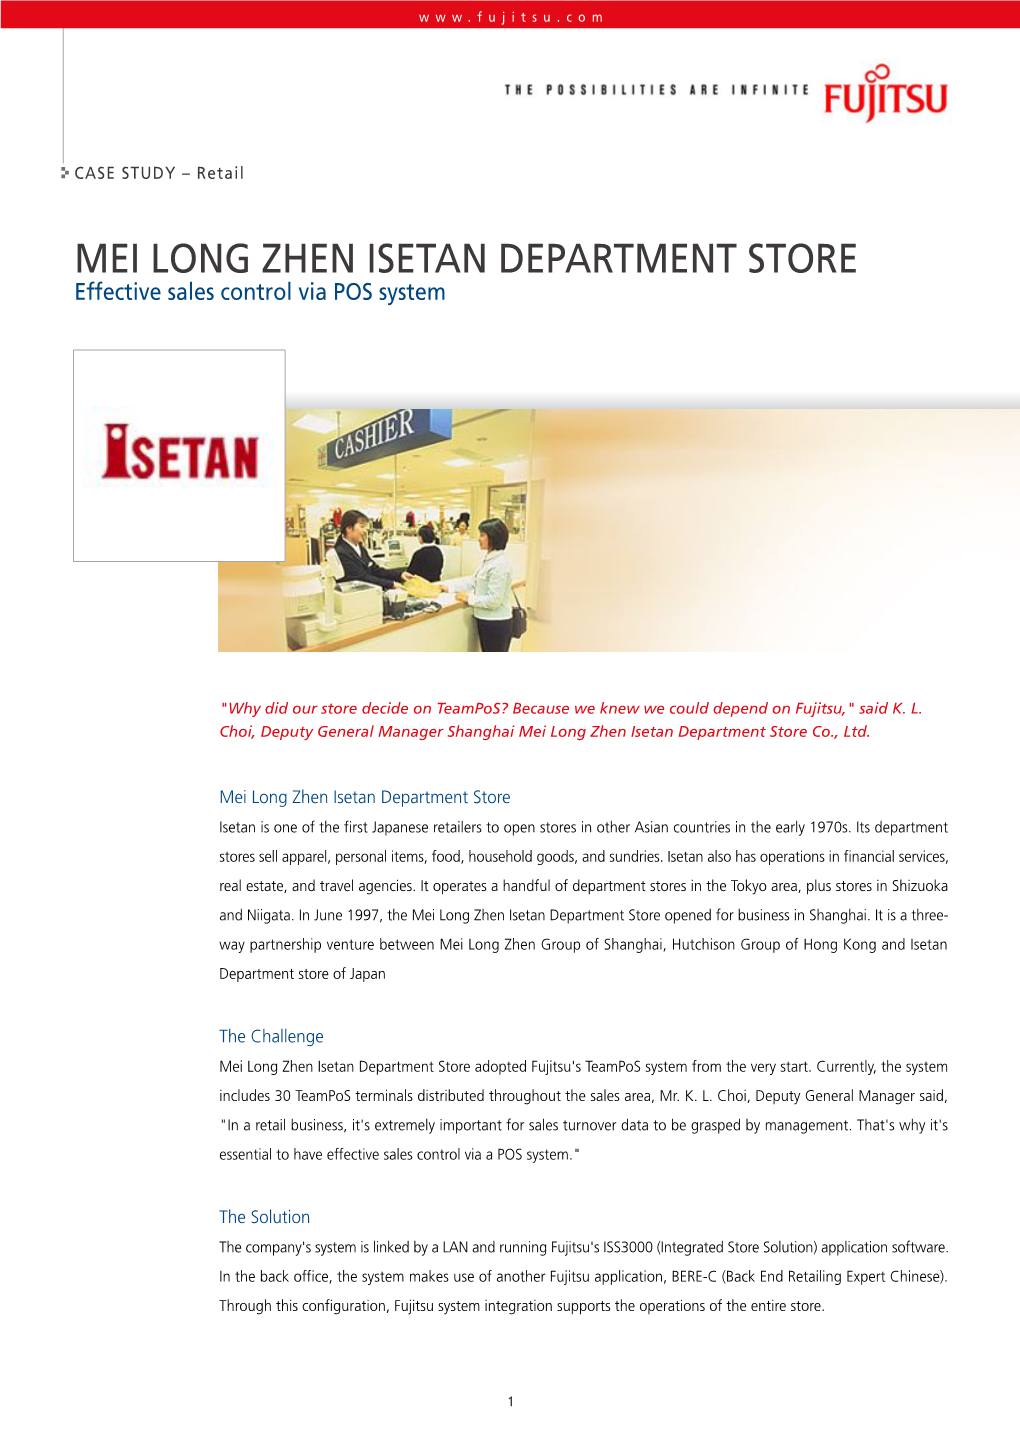 MEI LONG ZHEN ISETAN DEPARTMENT STORE Effective Sales Control Via POS System